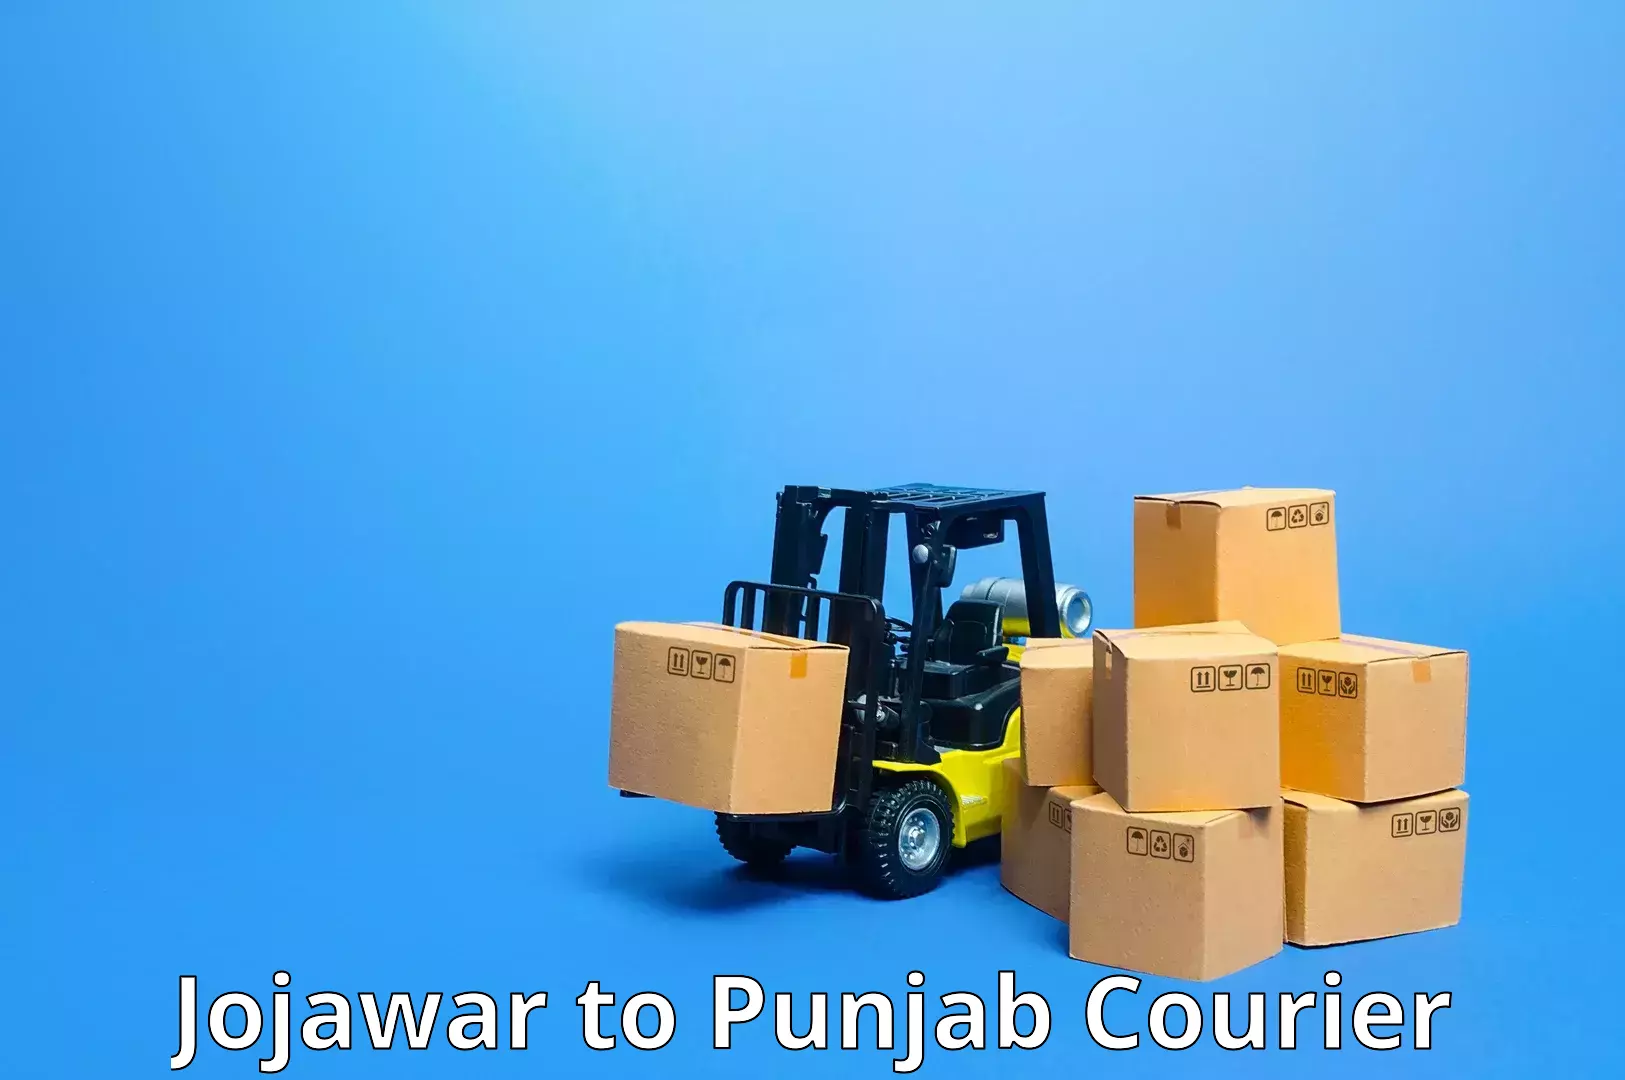 Specialized shipment handling Jojawar to Mohali